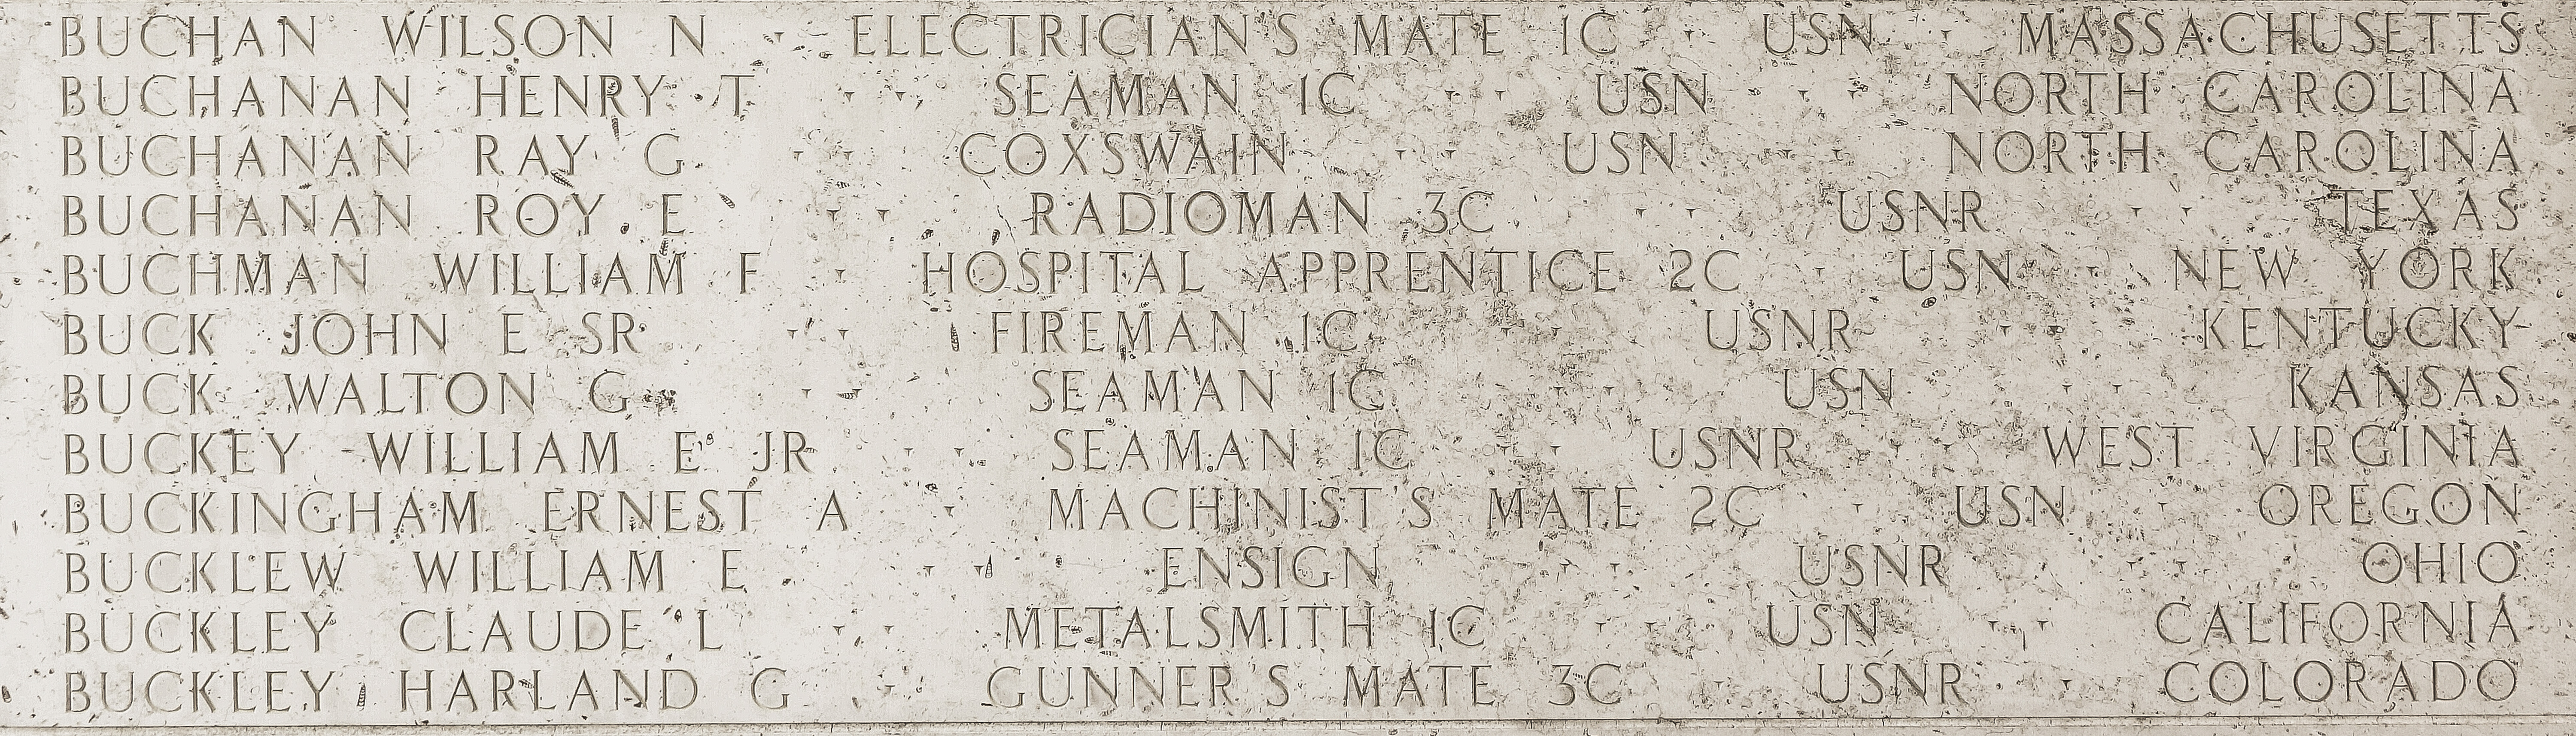 William F. Buchman, Hospital Apprentice Second Class